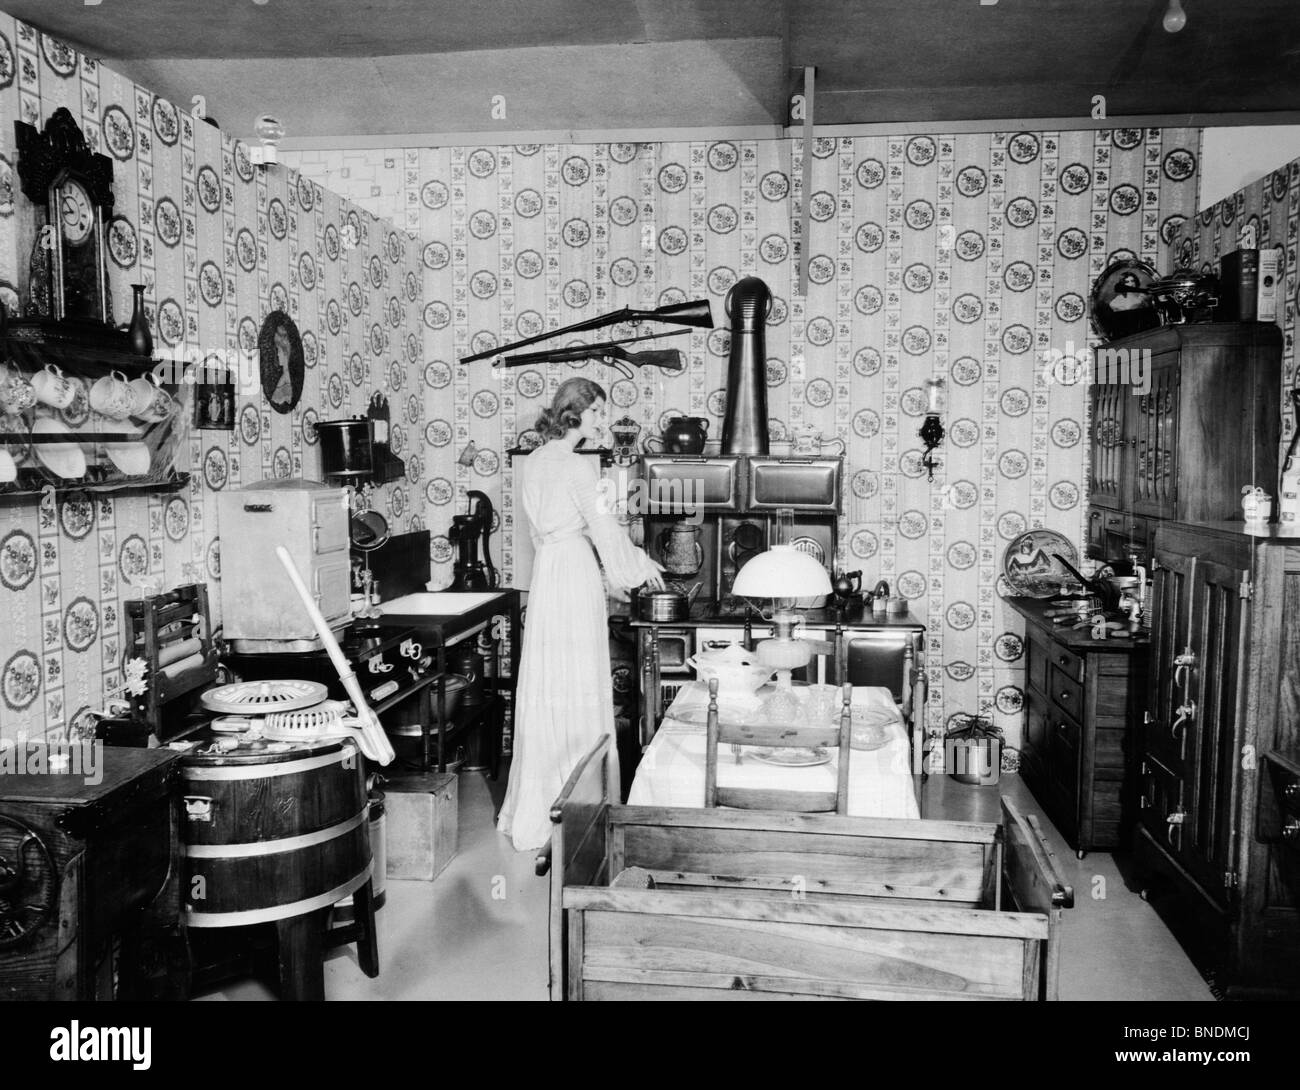 https://c8.alamy.com/comp/BNDMCJ/rear-view-of-a-young-woman-preparing-food-in-a-kitchen-pioneer-village-BNDMCJ.jpg